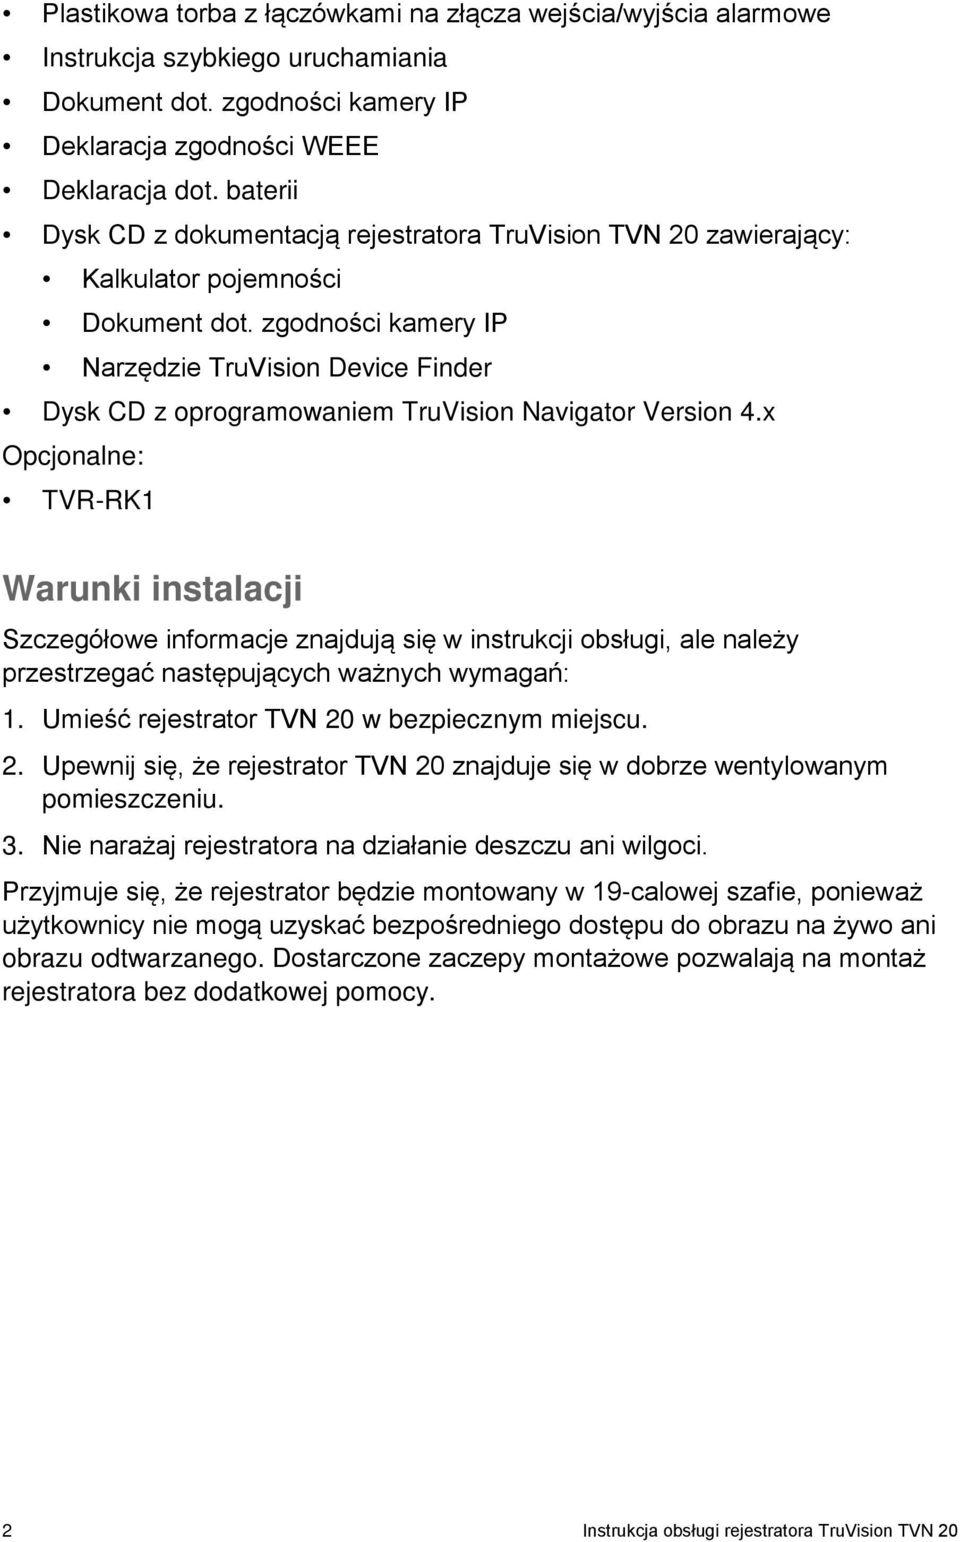 zgodności kamery IP Narzędzie TruVision Device Finder Dysk CD z oprogramowaniem TruVision Navigator Version 4.